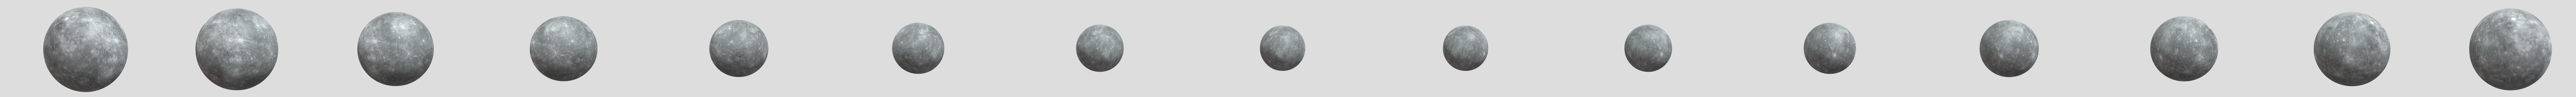 planet mercury 3d model project